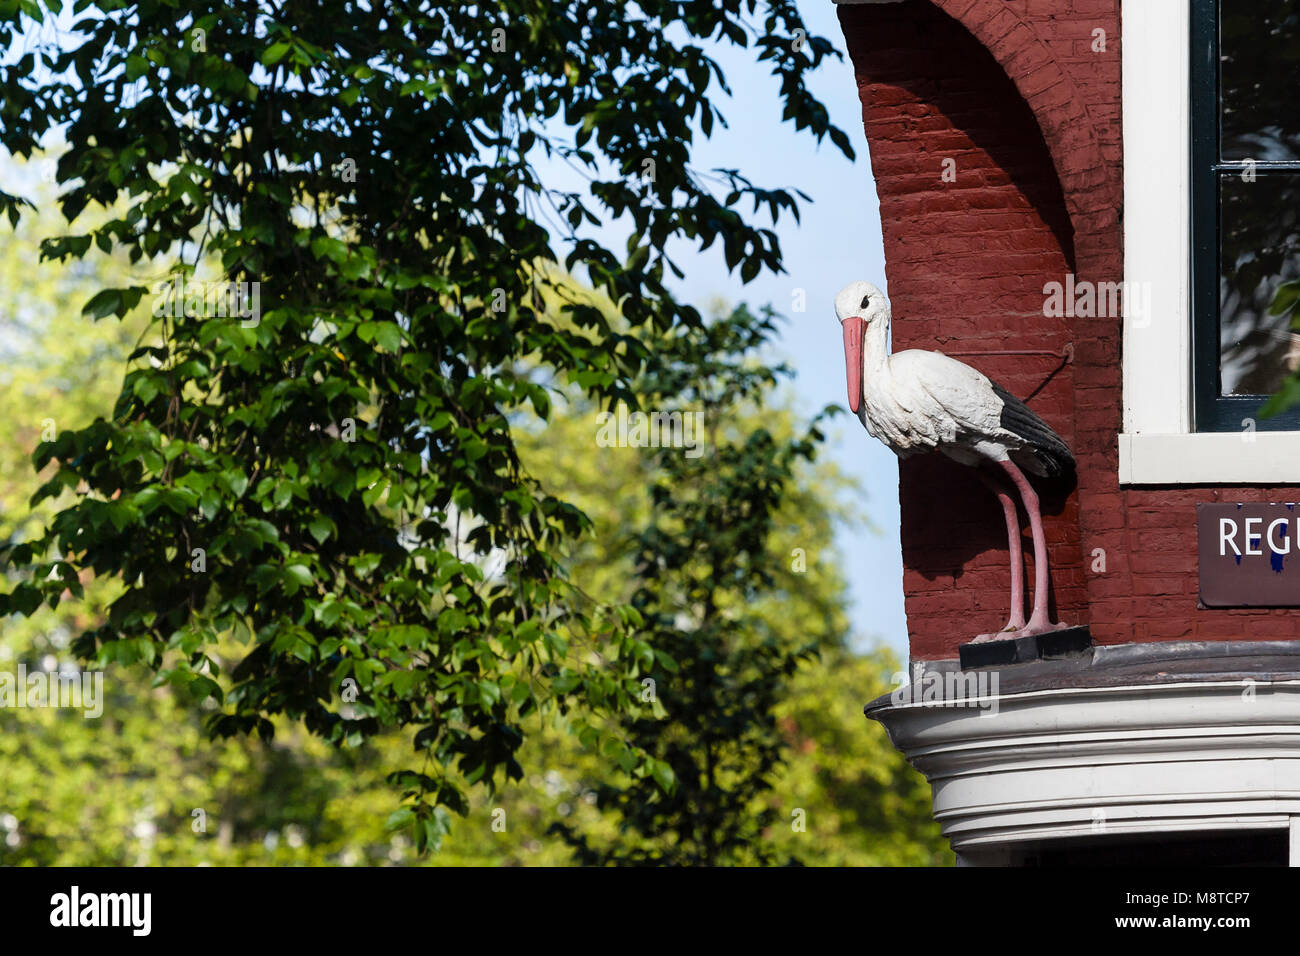 Ortstyp van ooievaar op kruising Prinsengracht en Reguliersgracht; Statue von Stork an der Kreuzung der Prinsengracht und Reguliersgracht Stockfoto